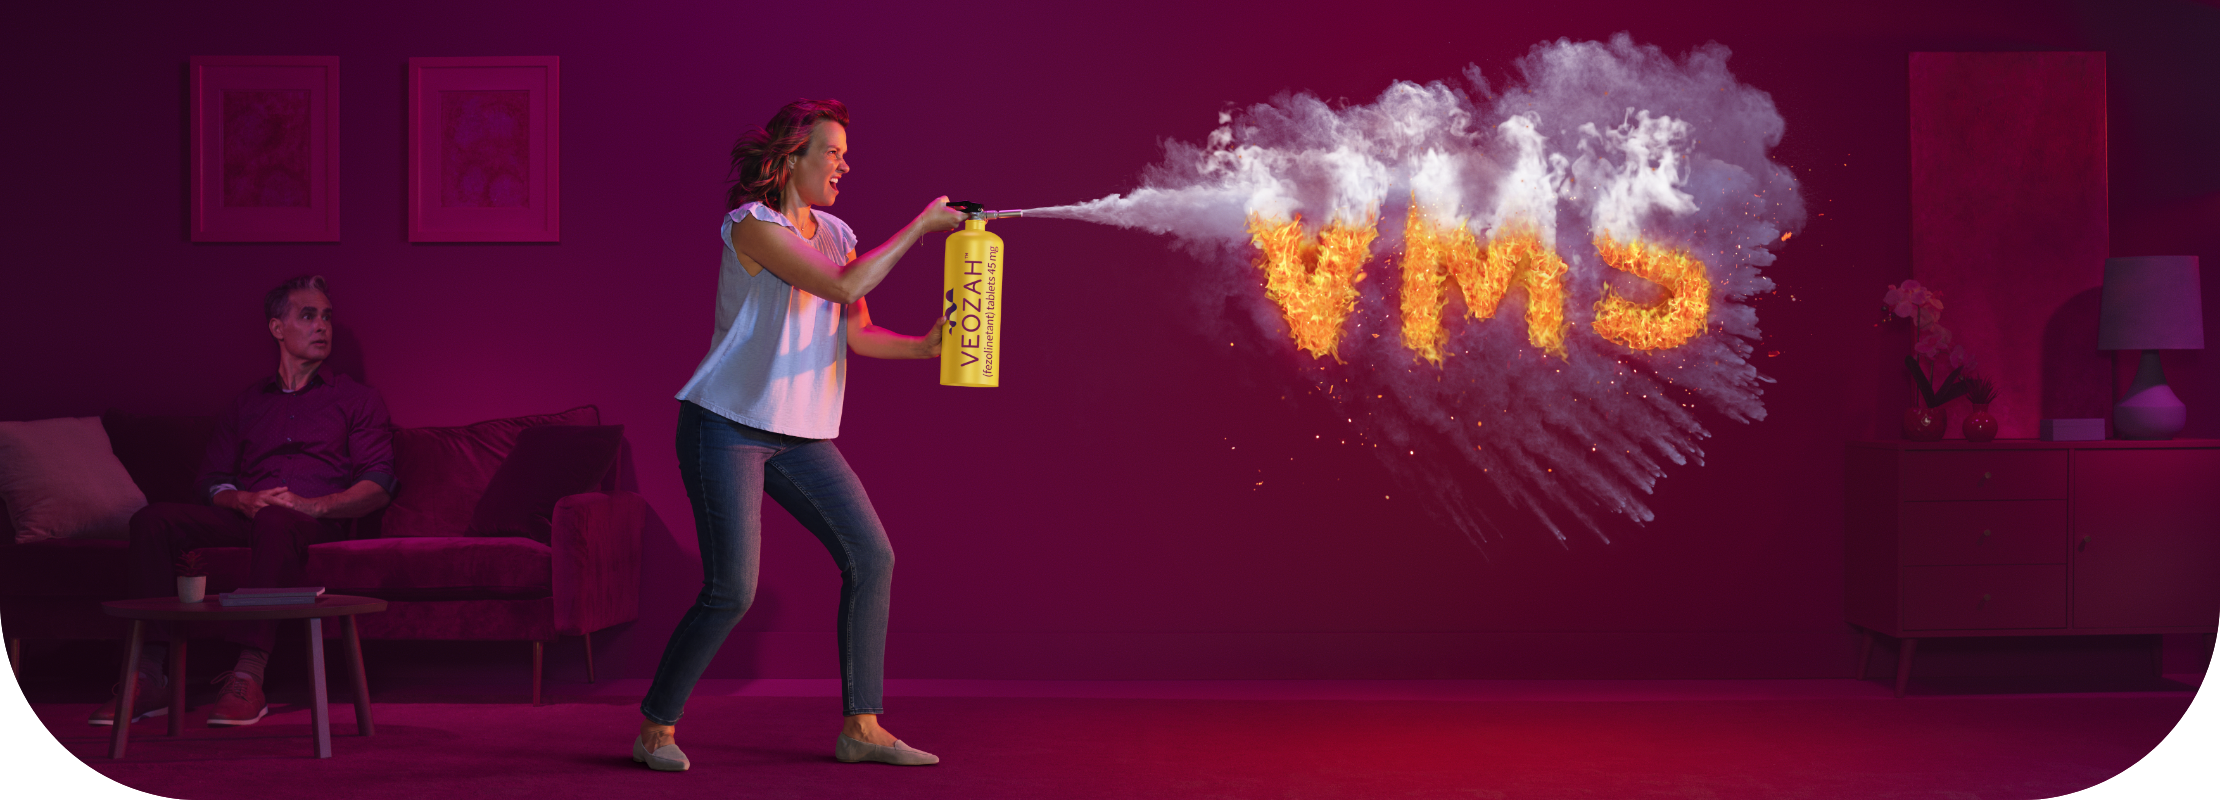 Woman spraying VEOZAHTM (fezolinetant) logo fire extinguisher at VMS fire